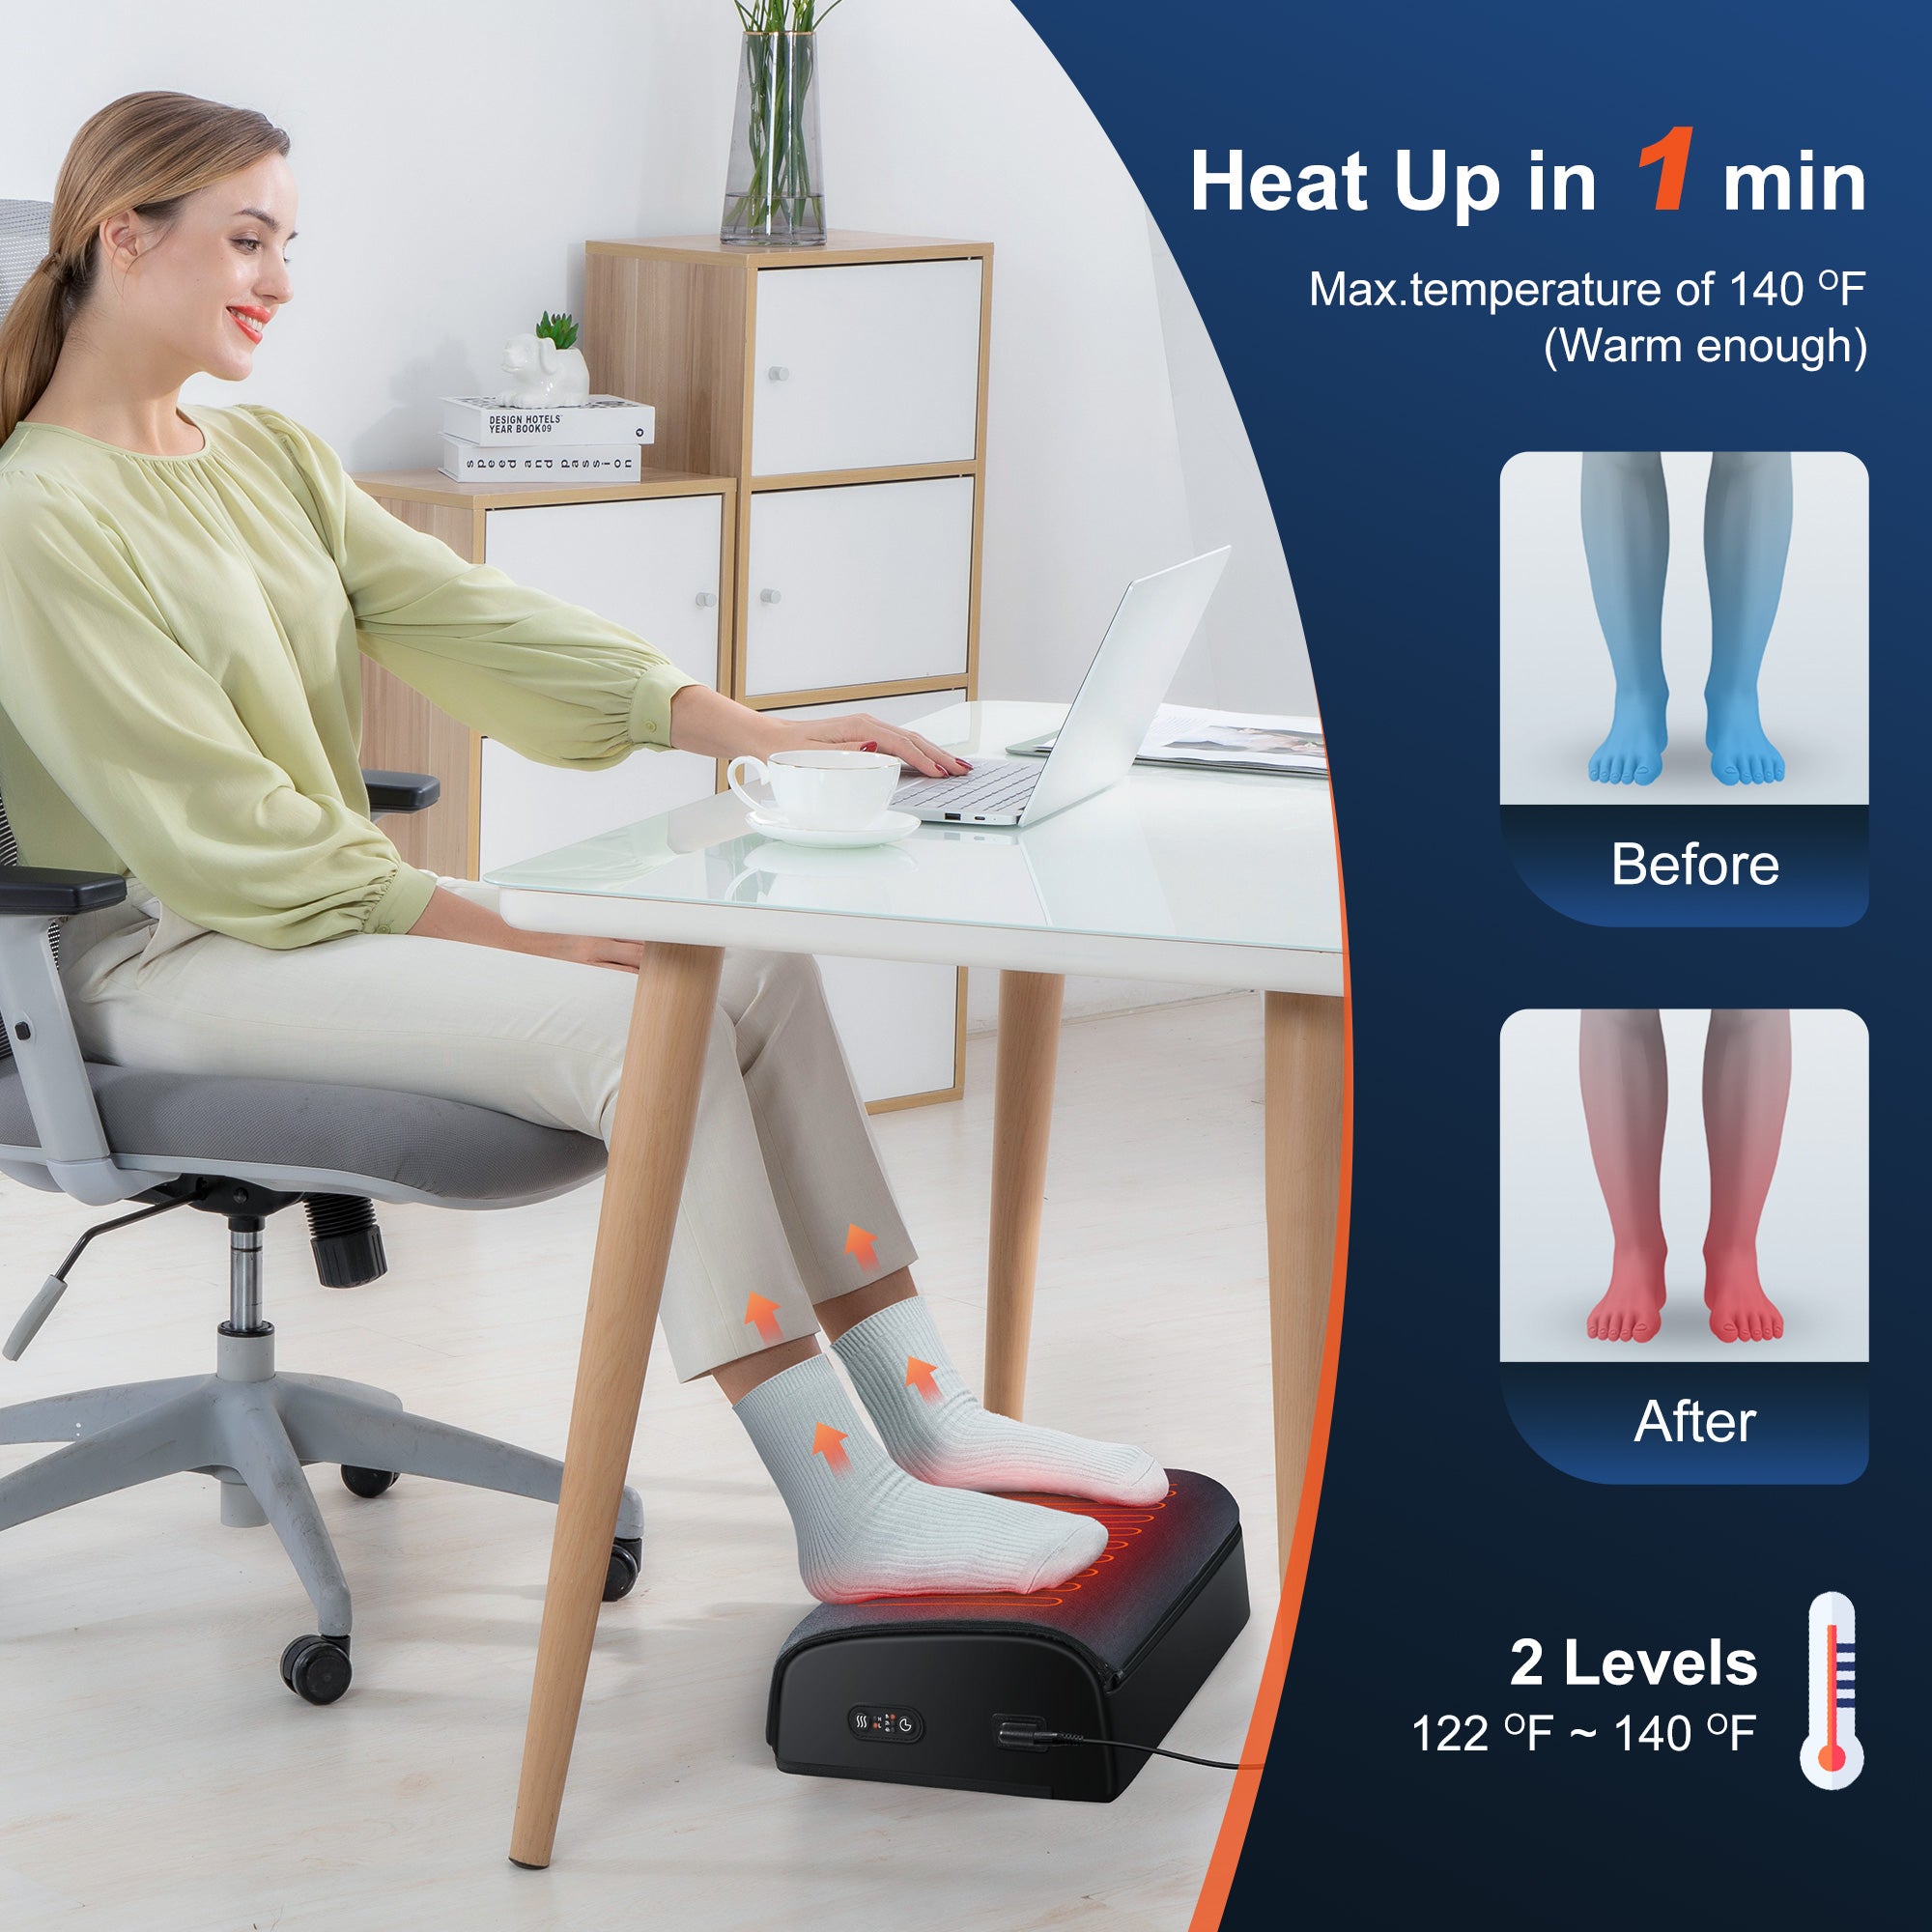 Foot Rest For Under Desk At Work For Office Use, Ergonomic